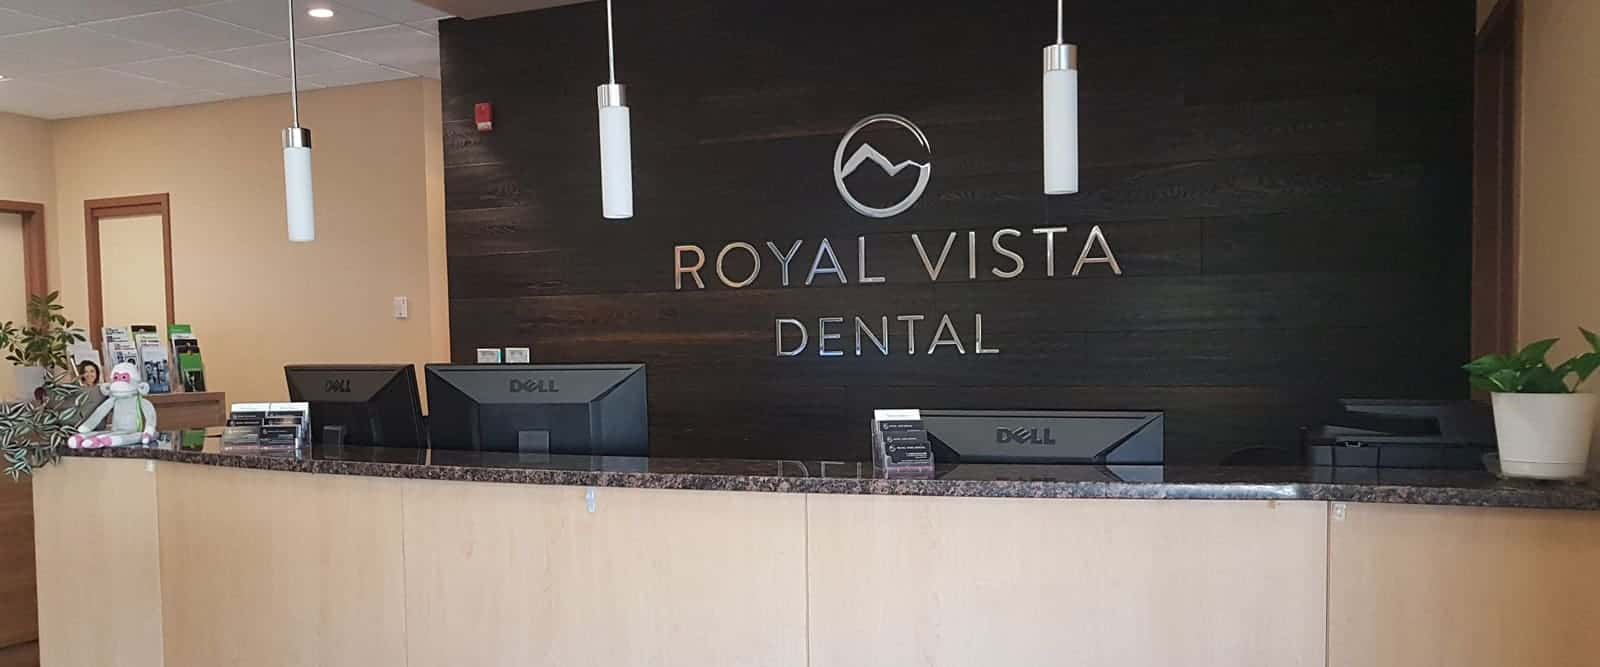 reception area of royal vista dental